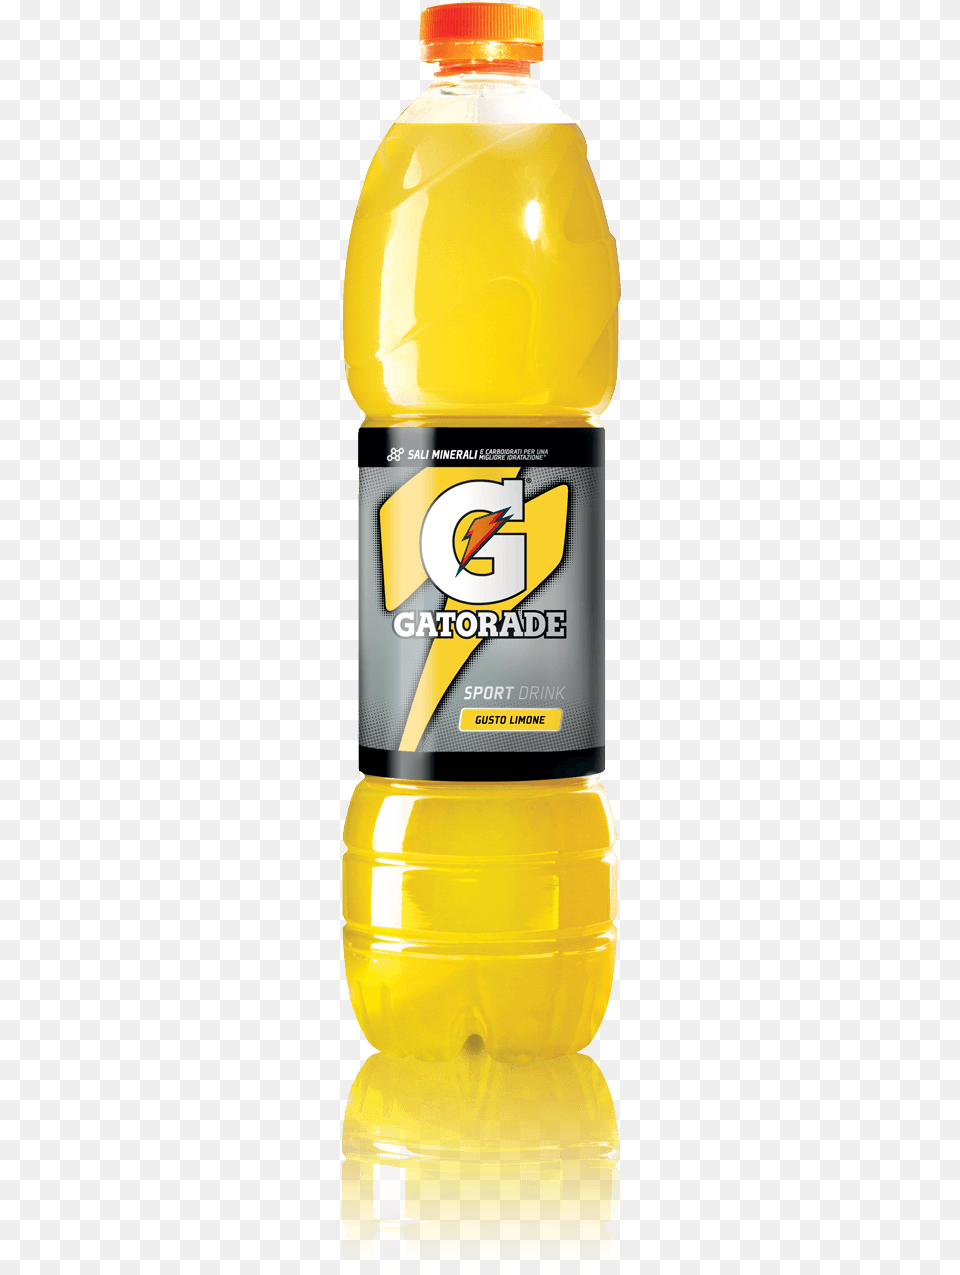 Gatorade Sport Drink Gusto Limone Bottiglia Gatorade, Beverage, Juice, Bottle, Shaker Png Image